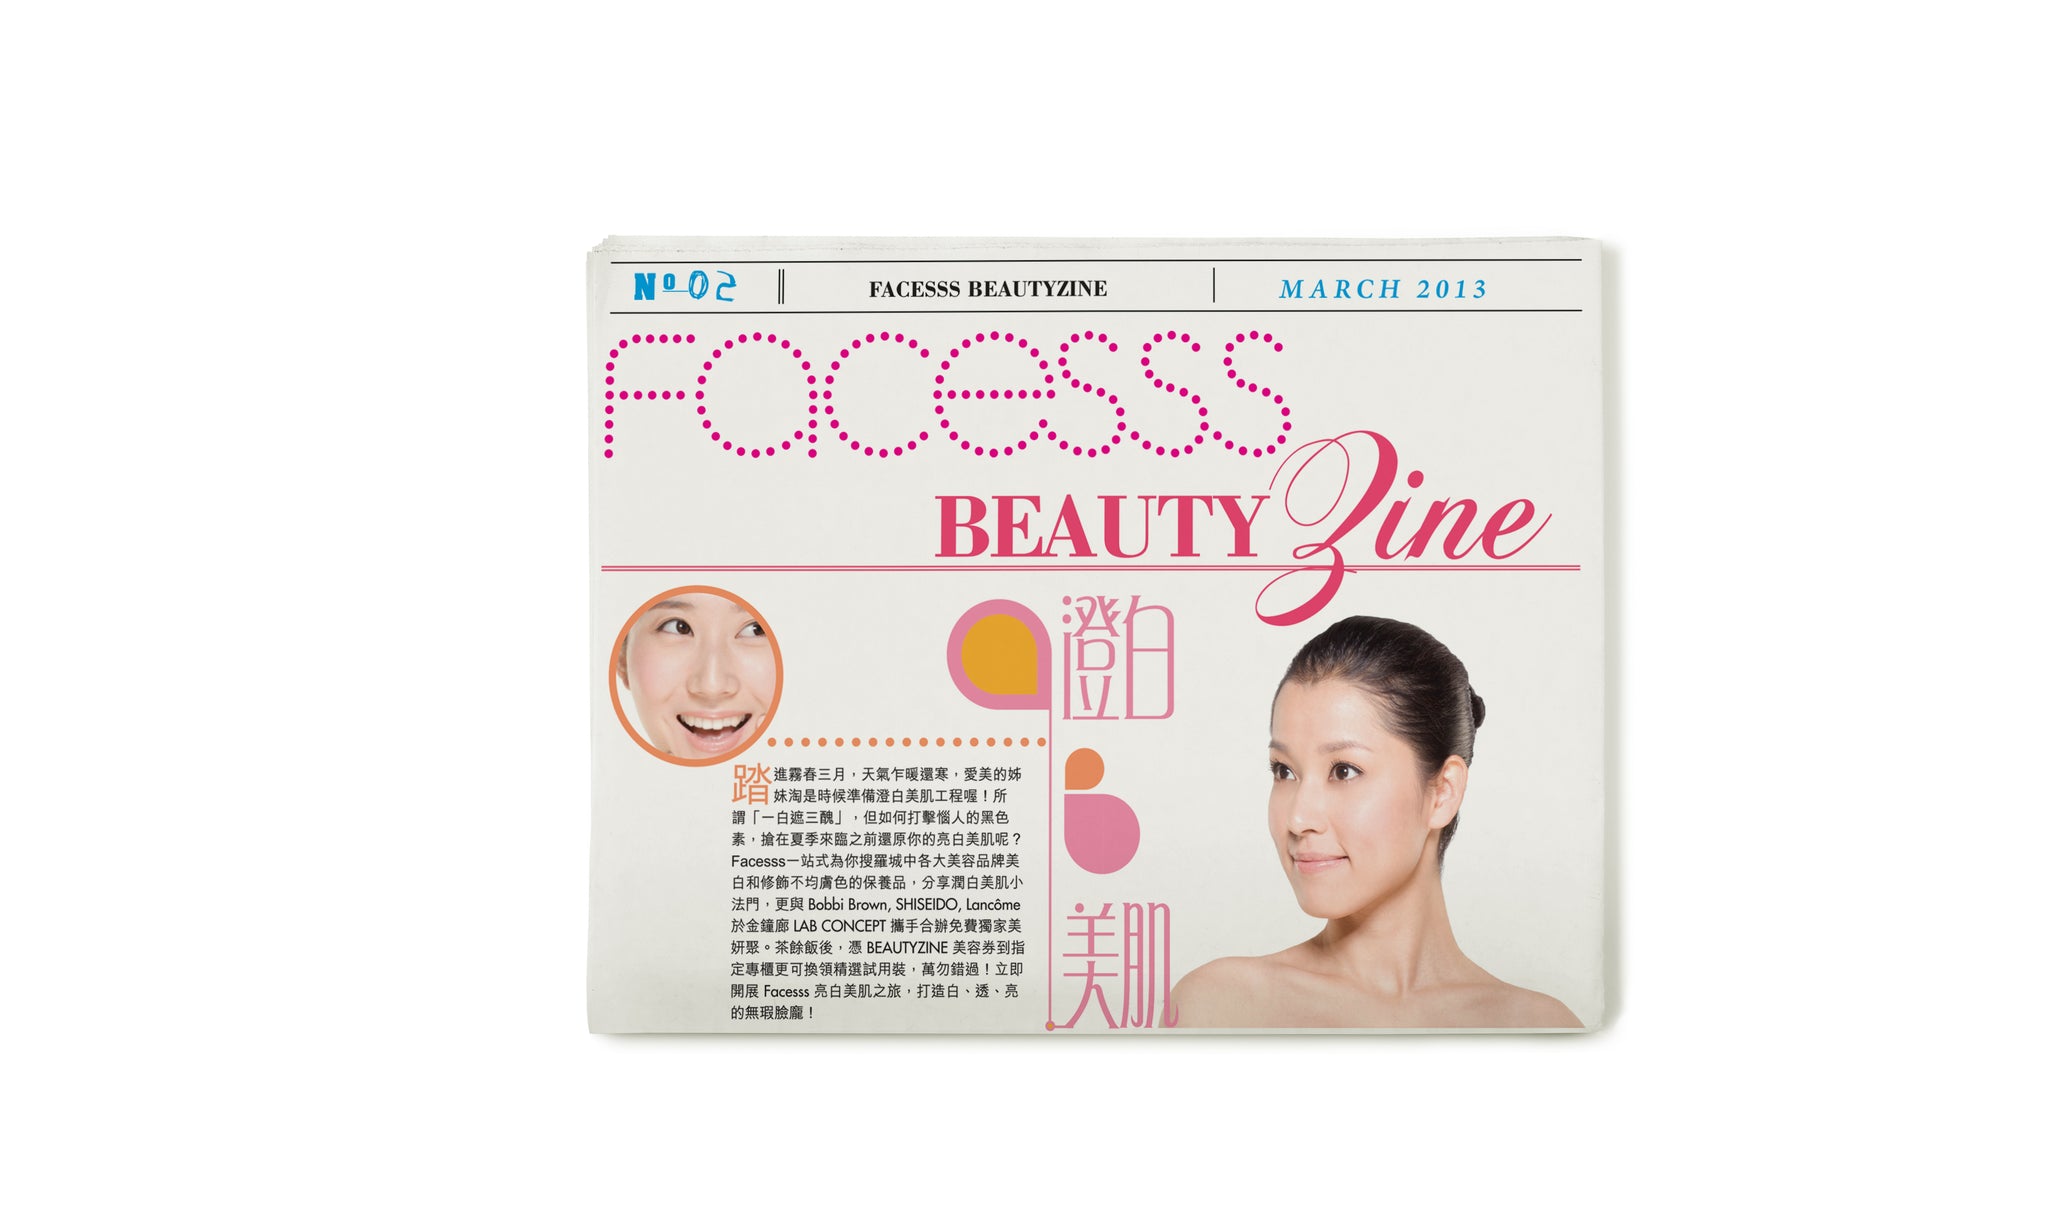 Beautyzine newsletter & marketing collateral